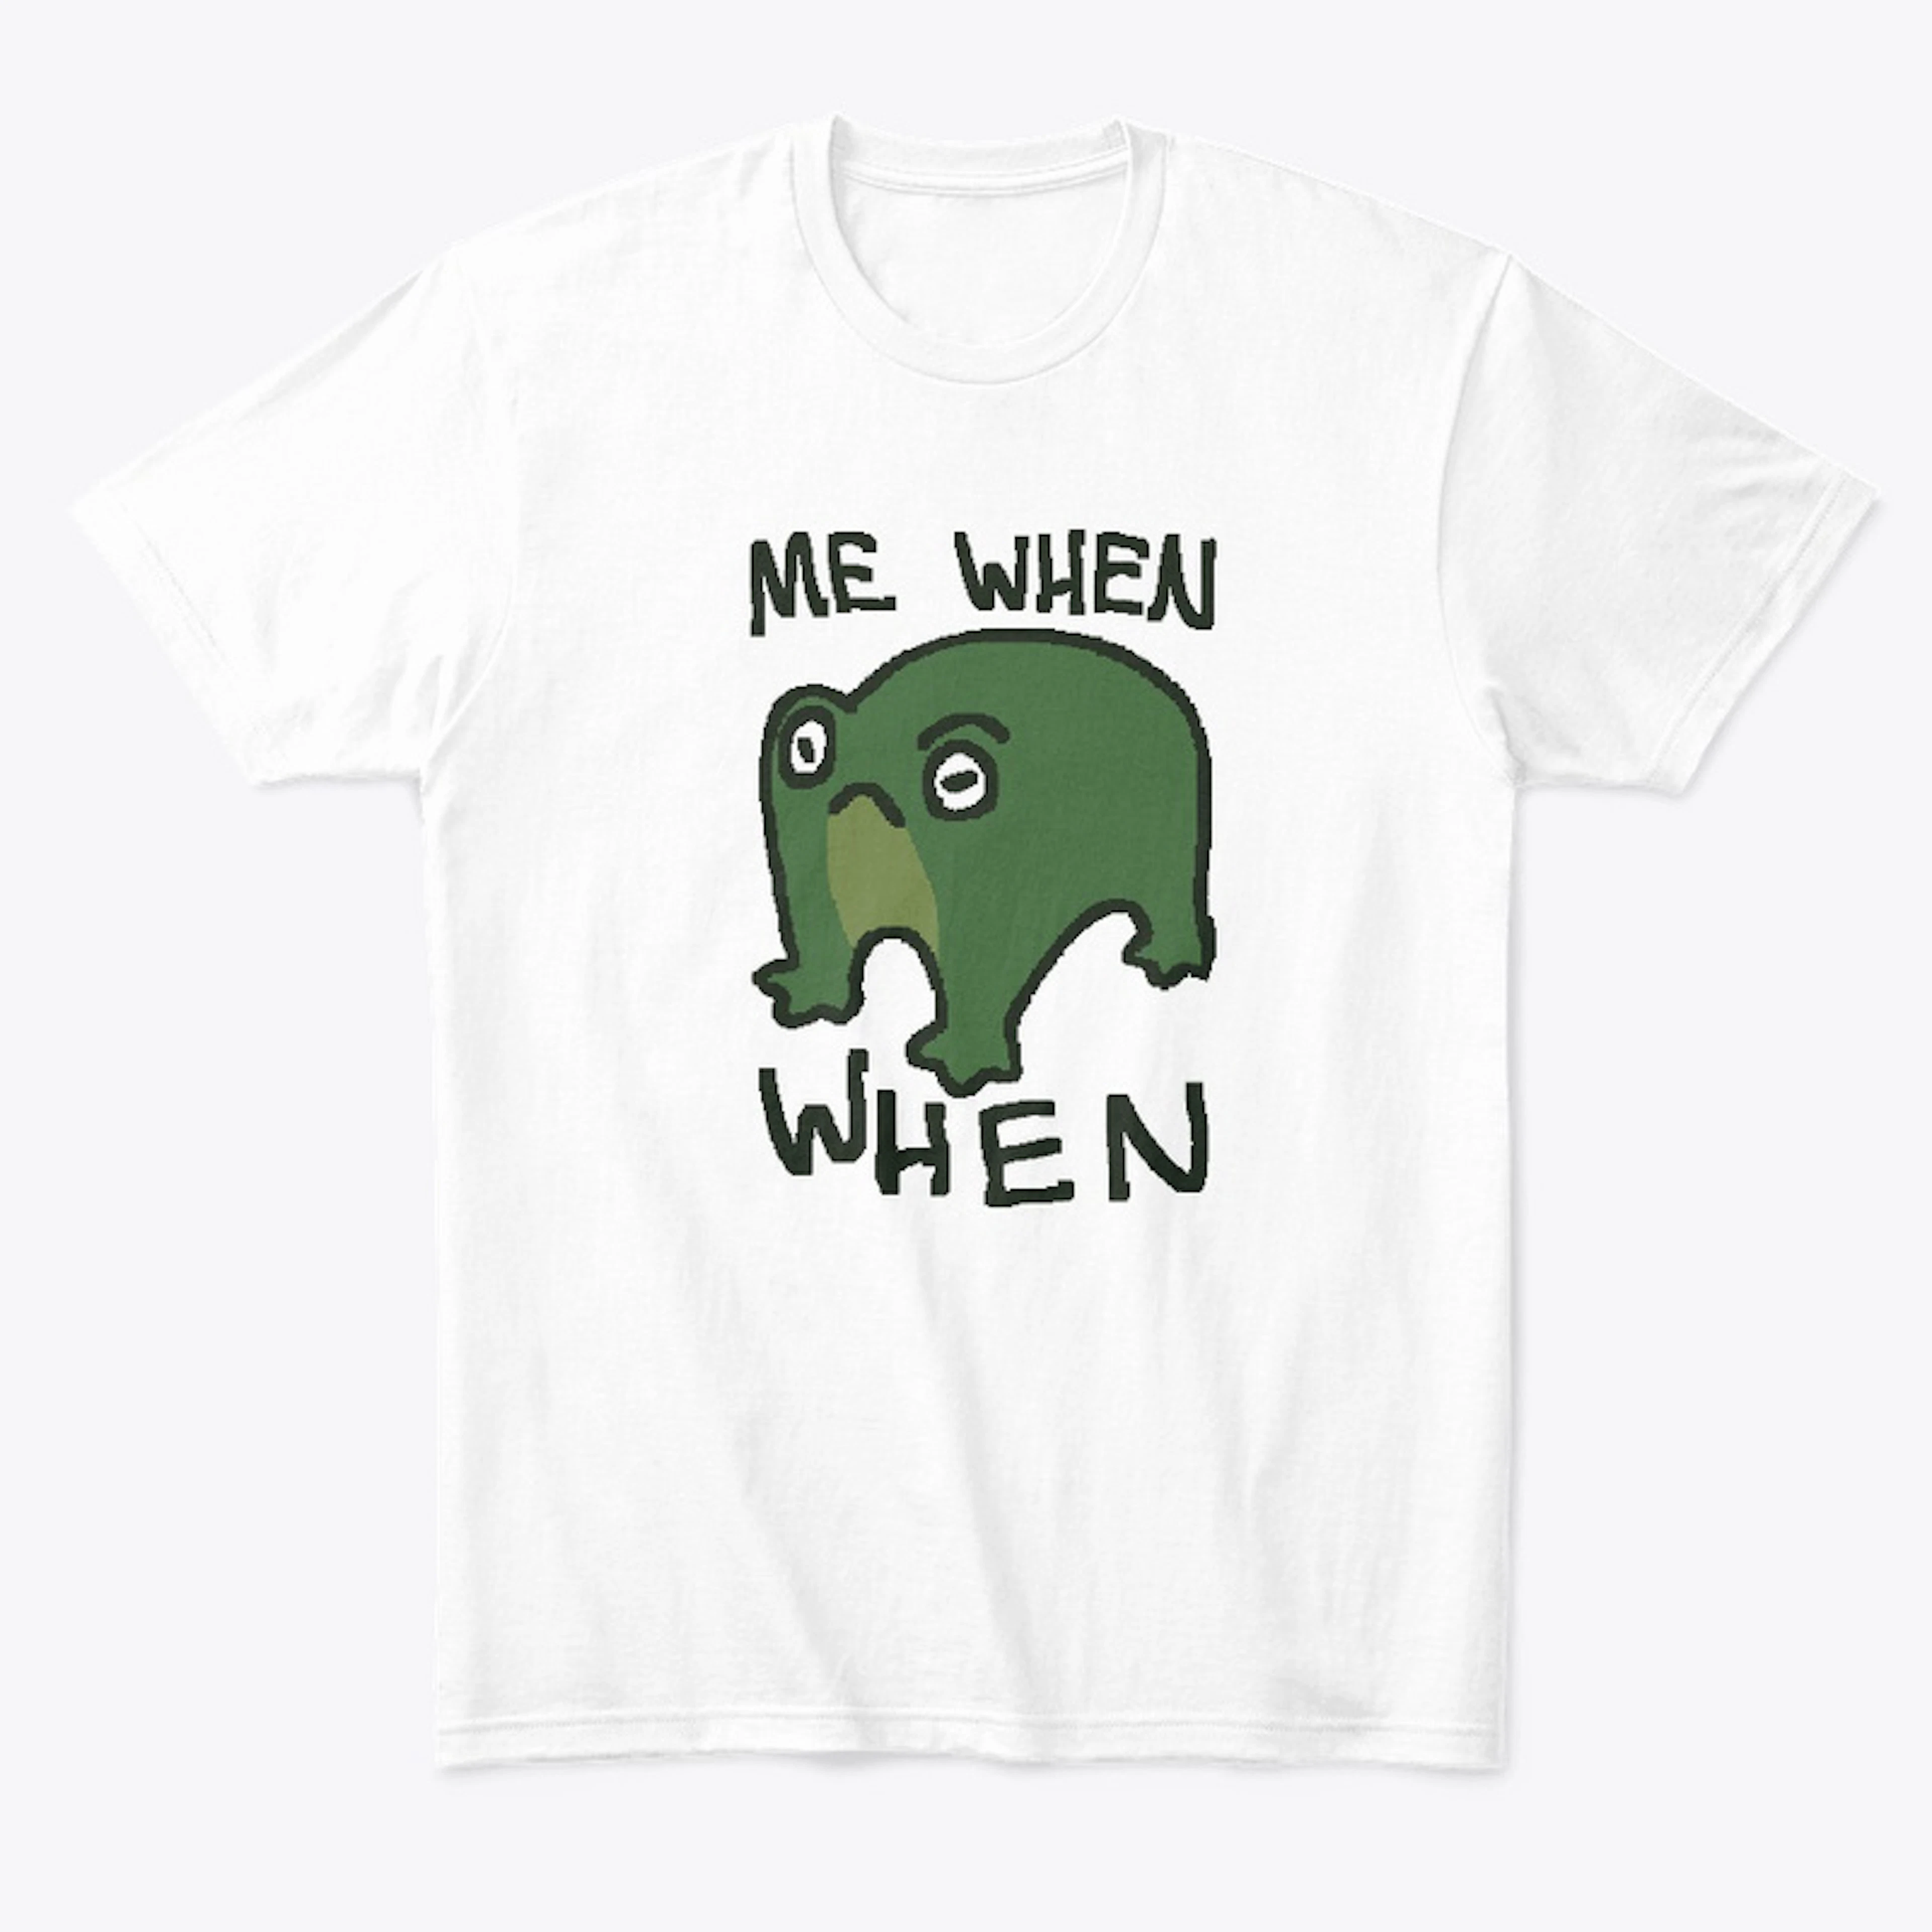 The Frog Shirt